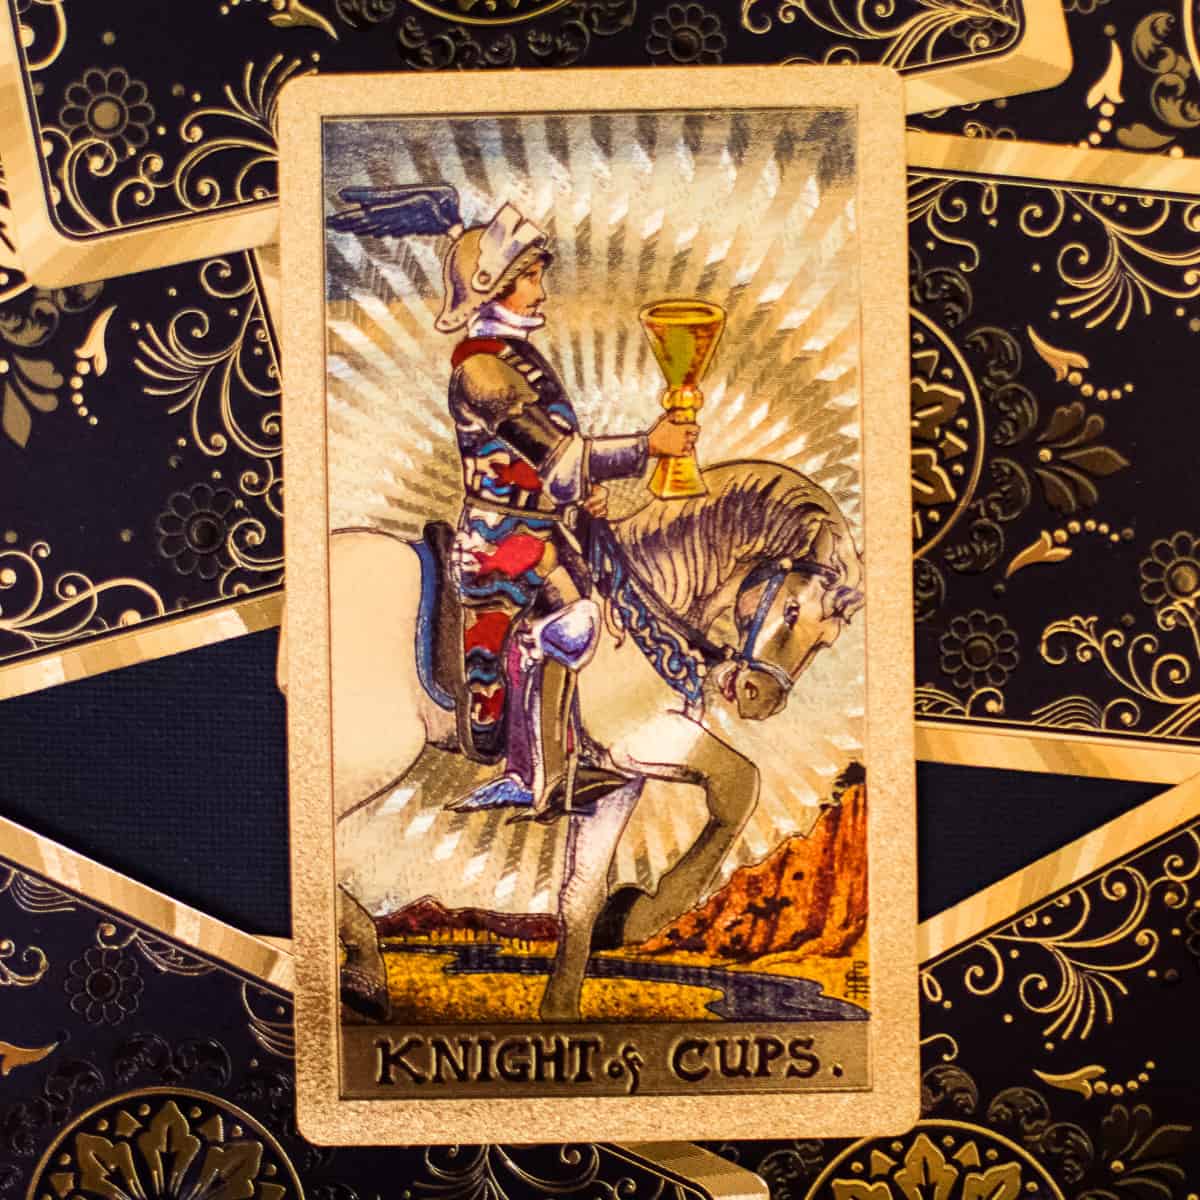 A knight holding a golden cup riding a horse on a tarot card.